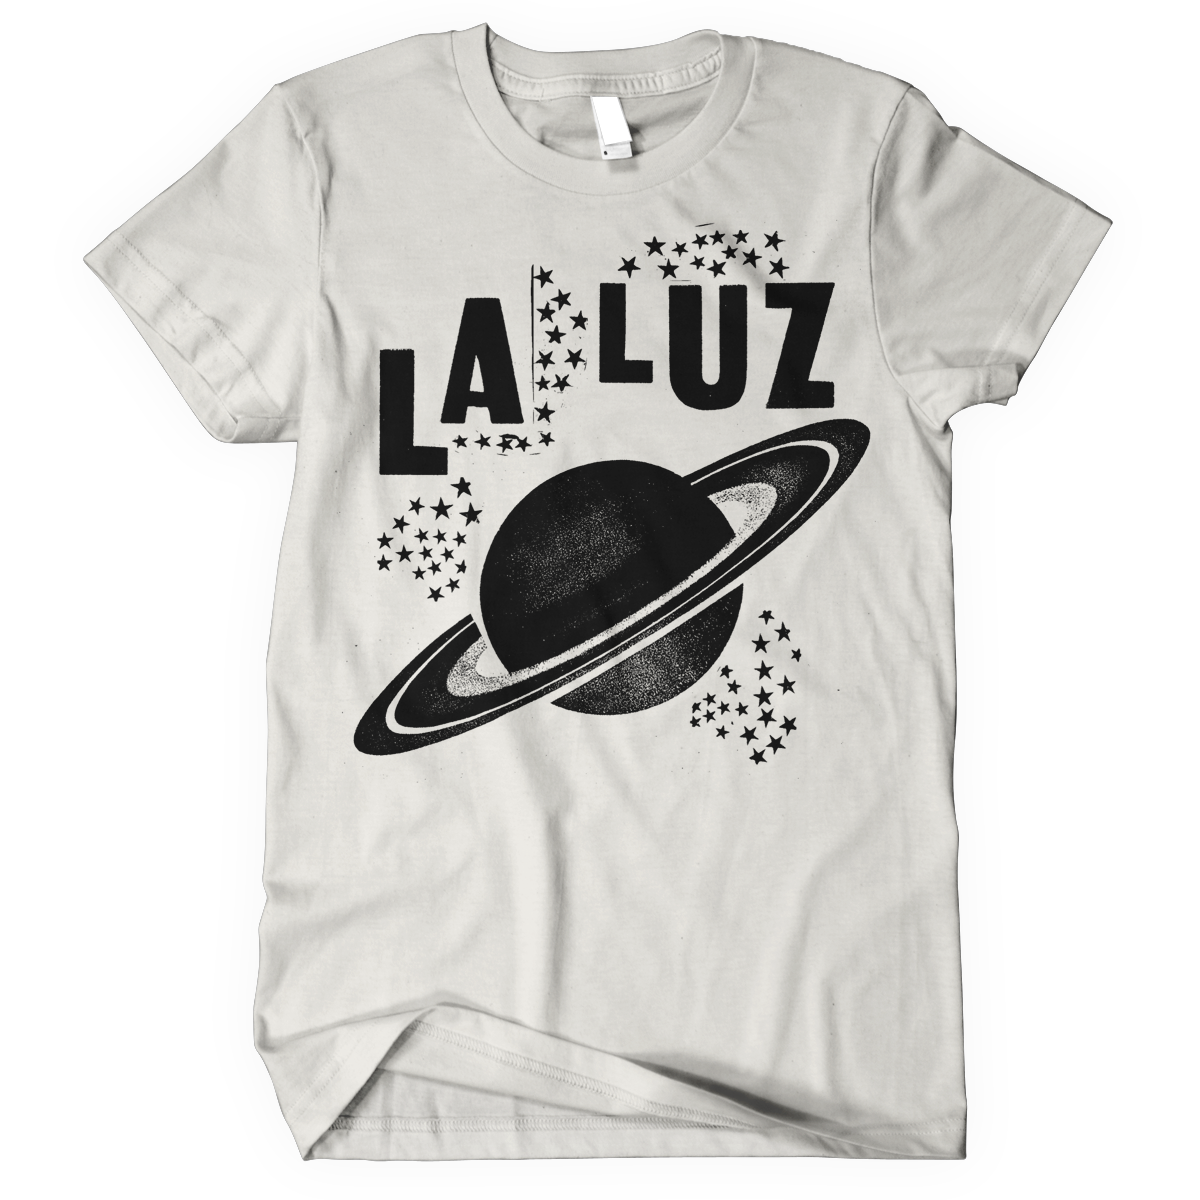 La Luz "Saturn" T-Shirt